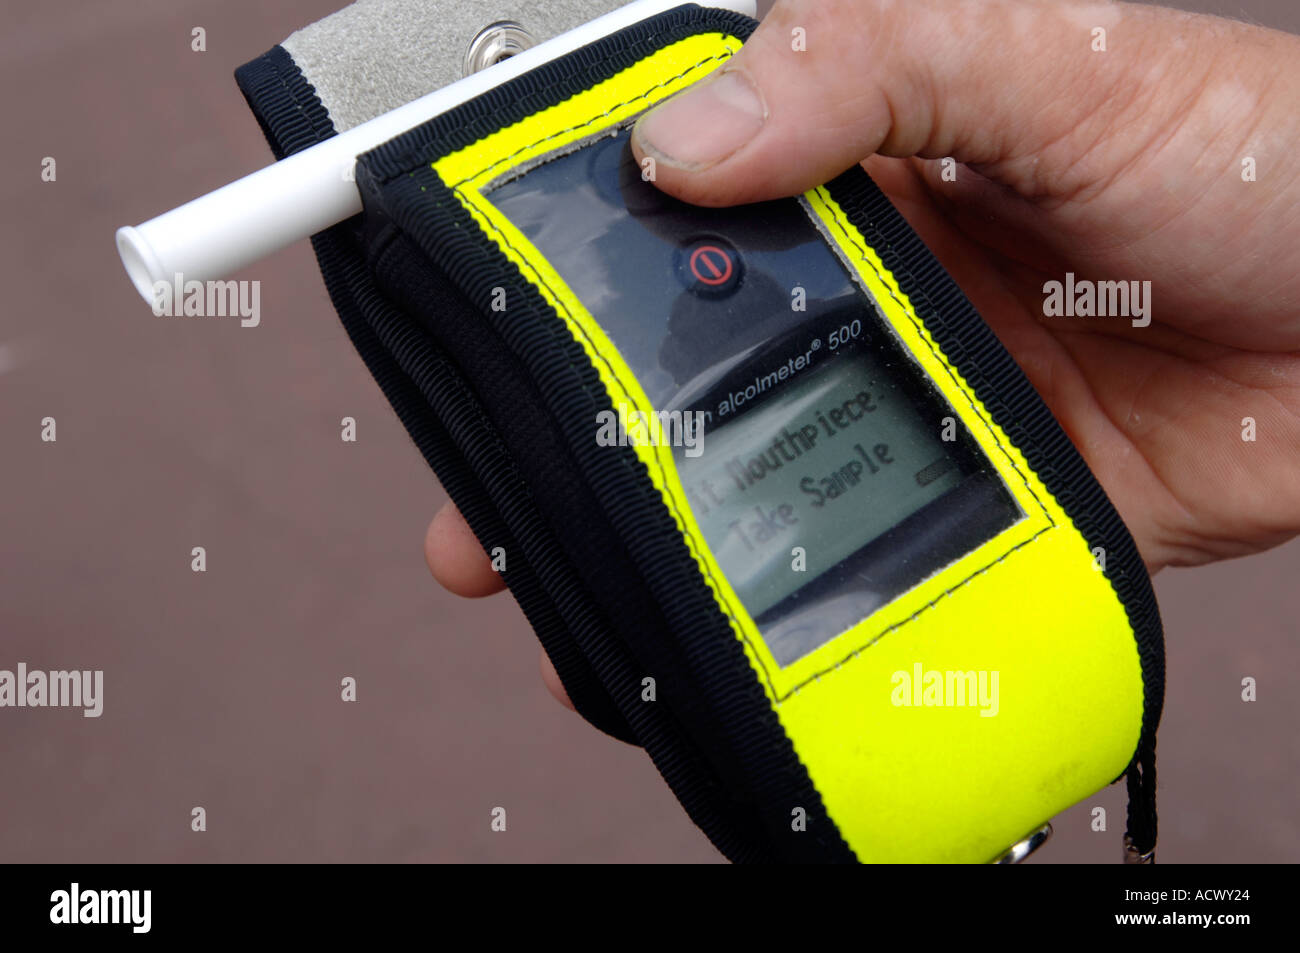 Alkohol-Test, Alkoholtester, Polizist zeigt das Gerät Stockfotografie -  Alamy